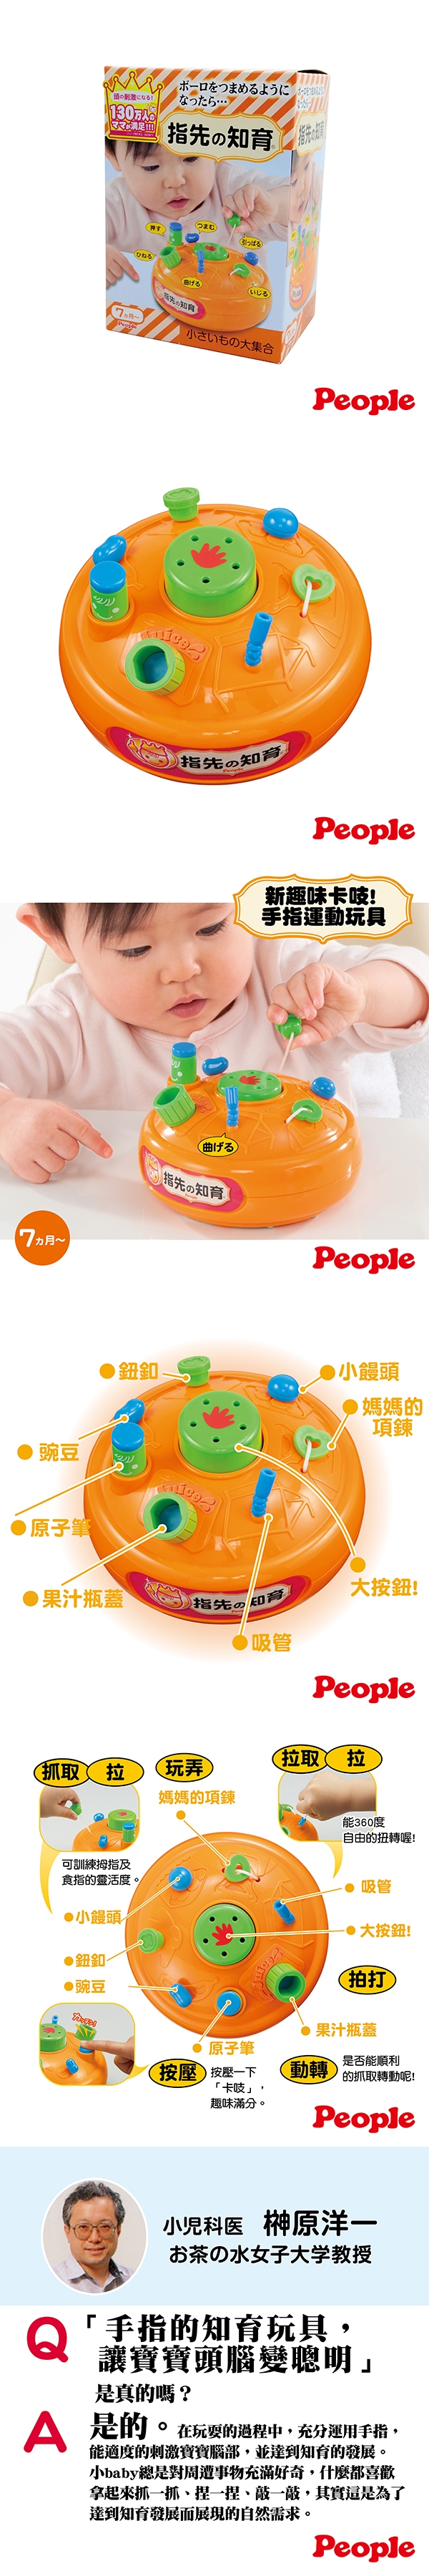 People-新趣味卡吱! 手指運動玩具(UB063)